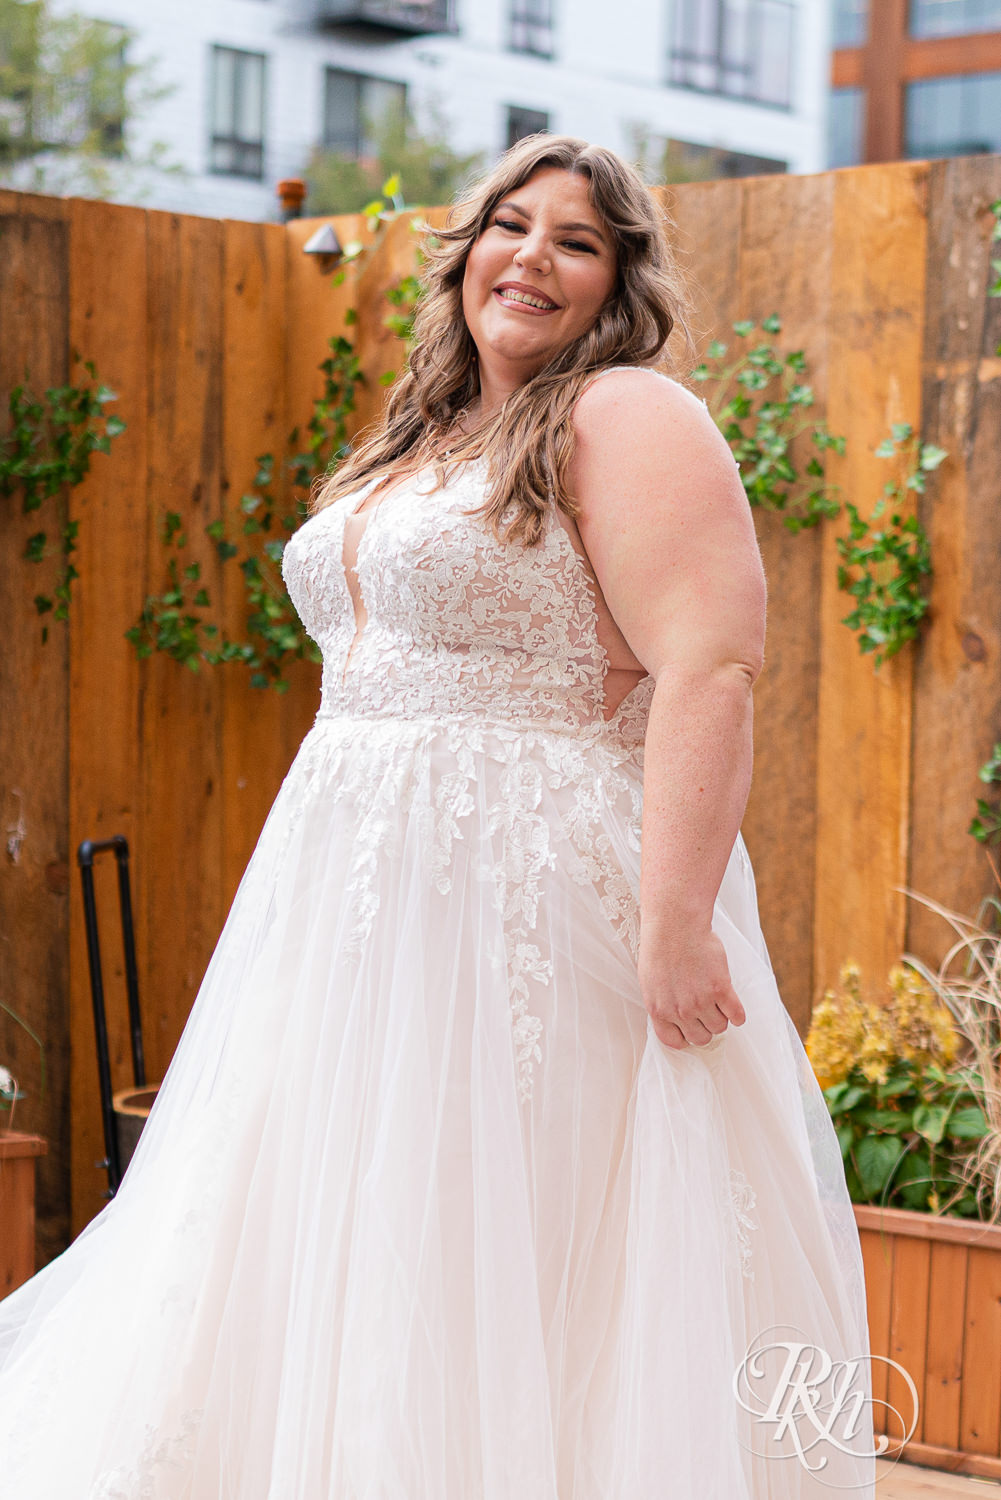 Plus size bride dancing in wedding dress in Minneapolis, Minnesota.